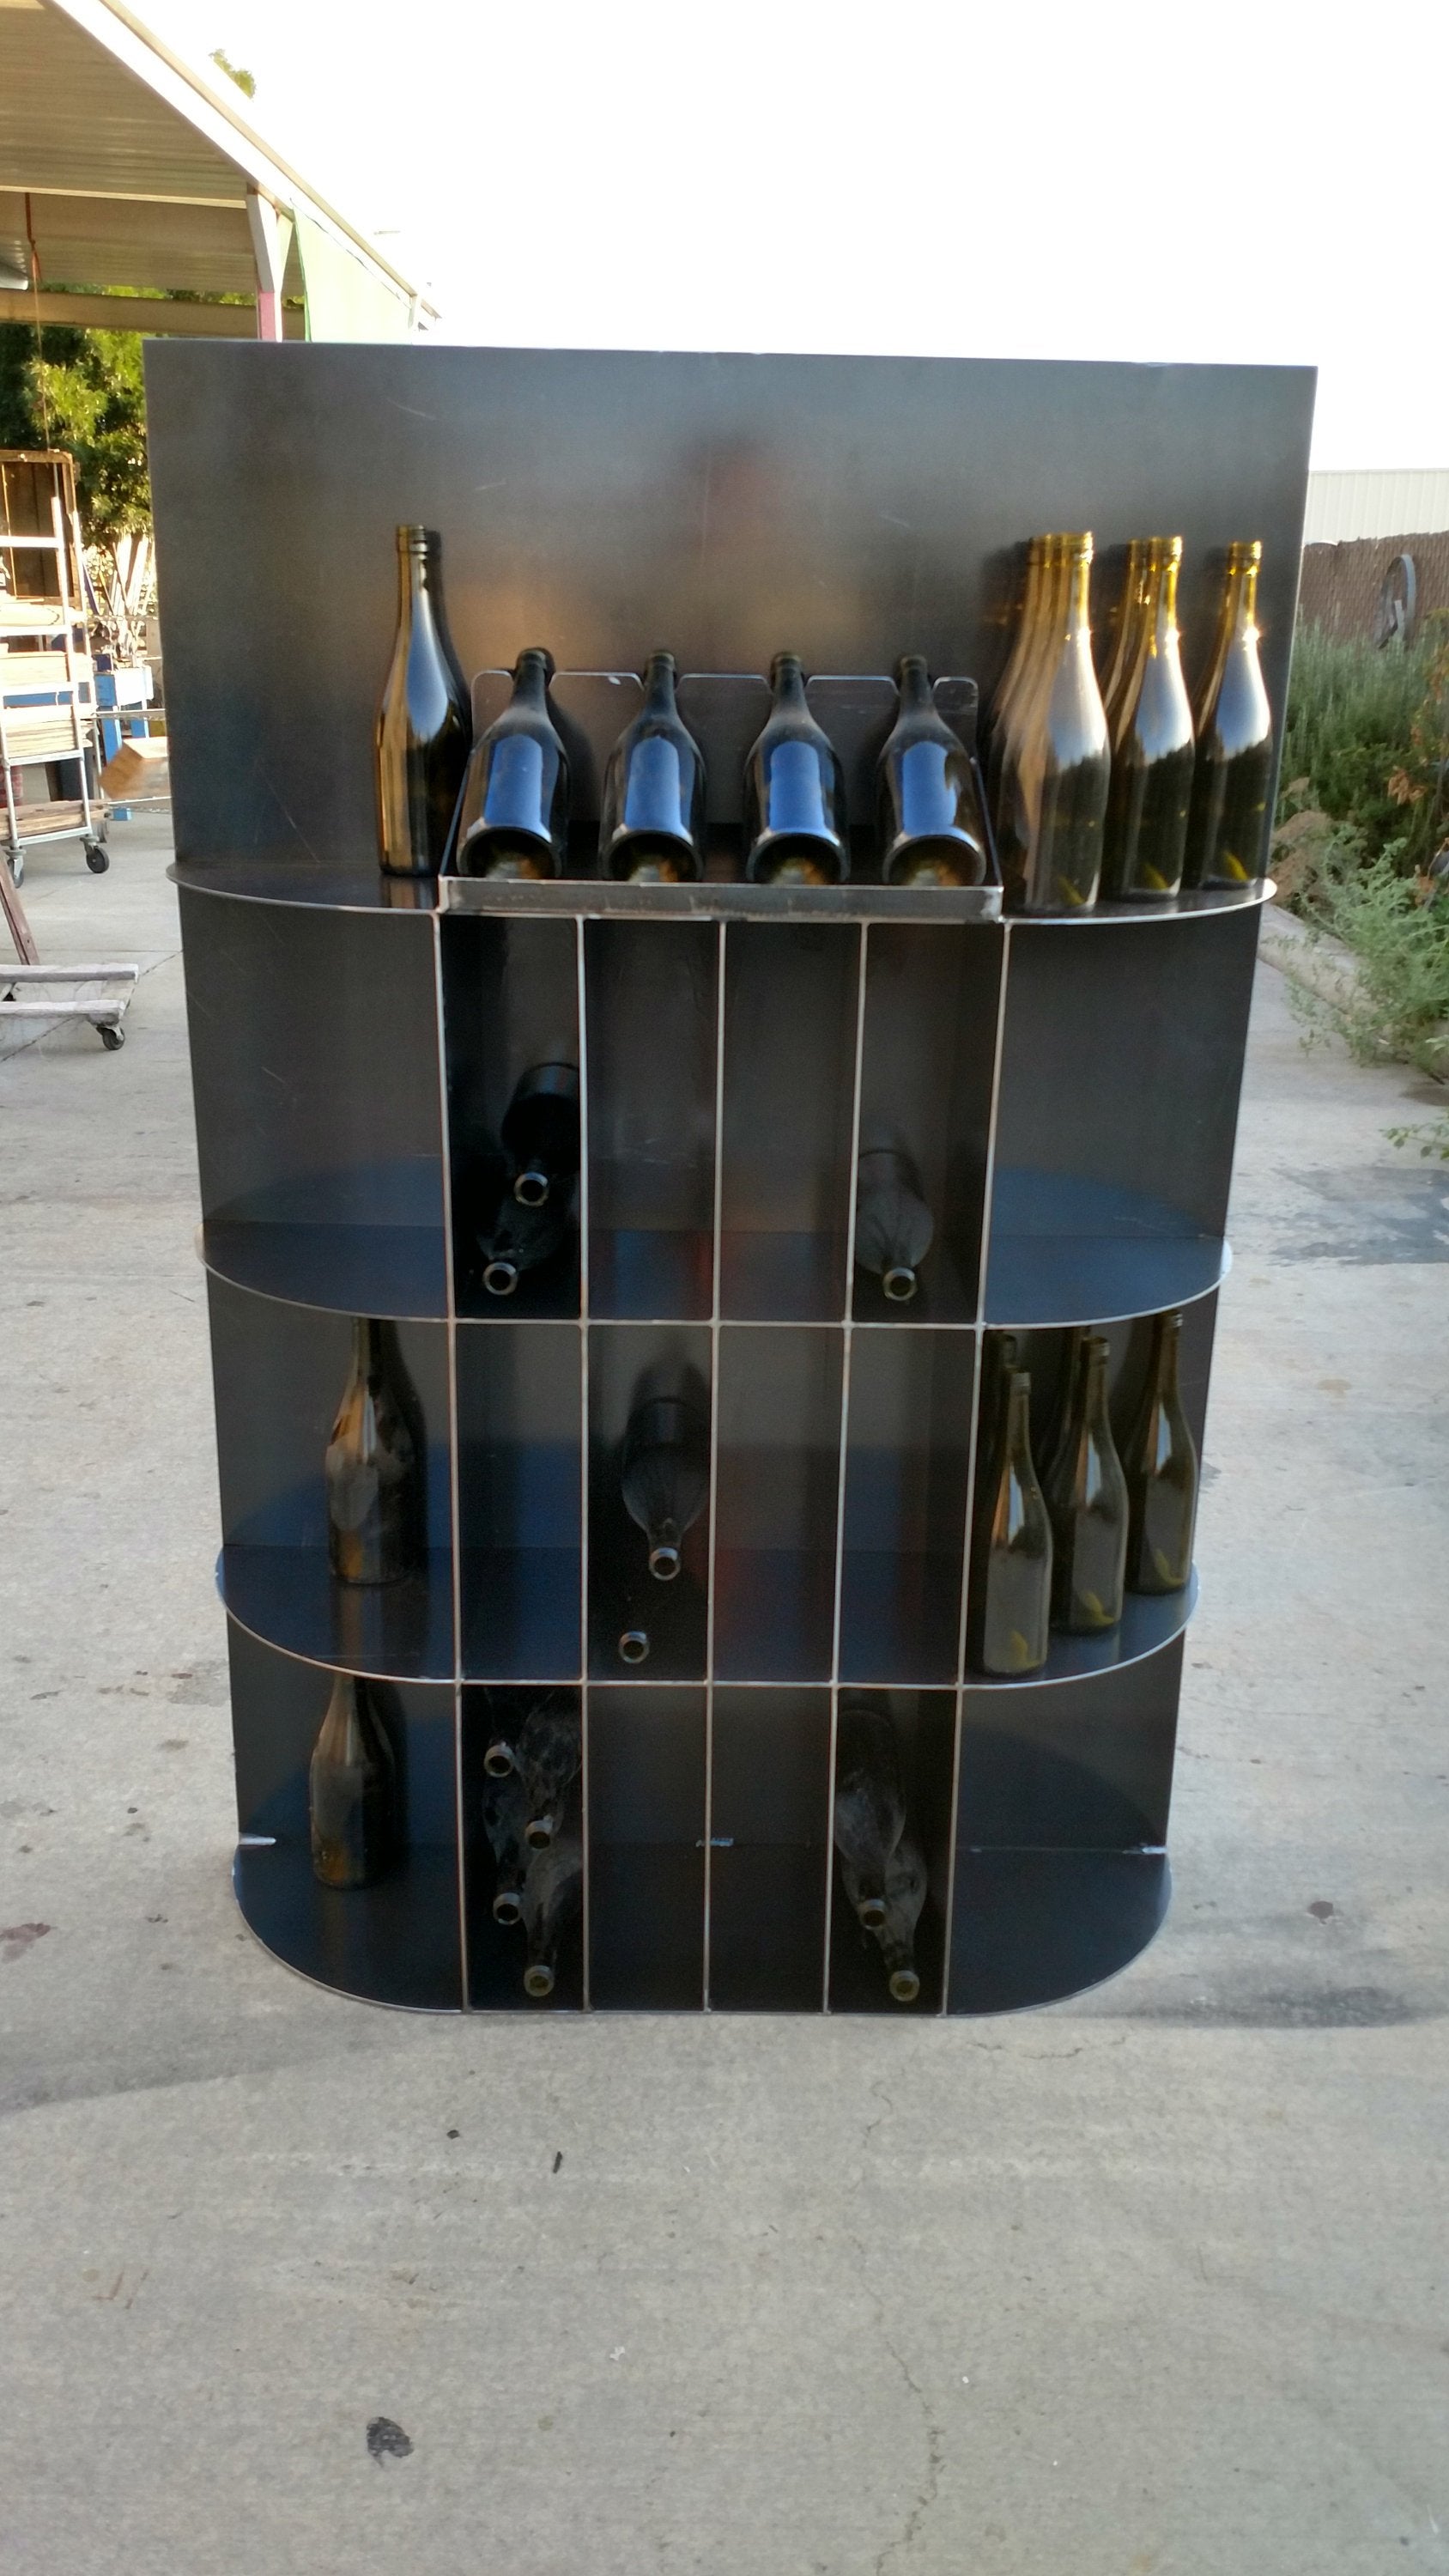 WINE RACK Collection - Keluli - Modern Industrial Wine Rack 